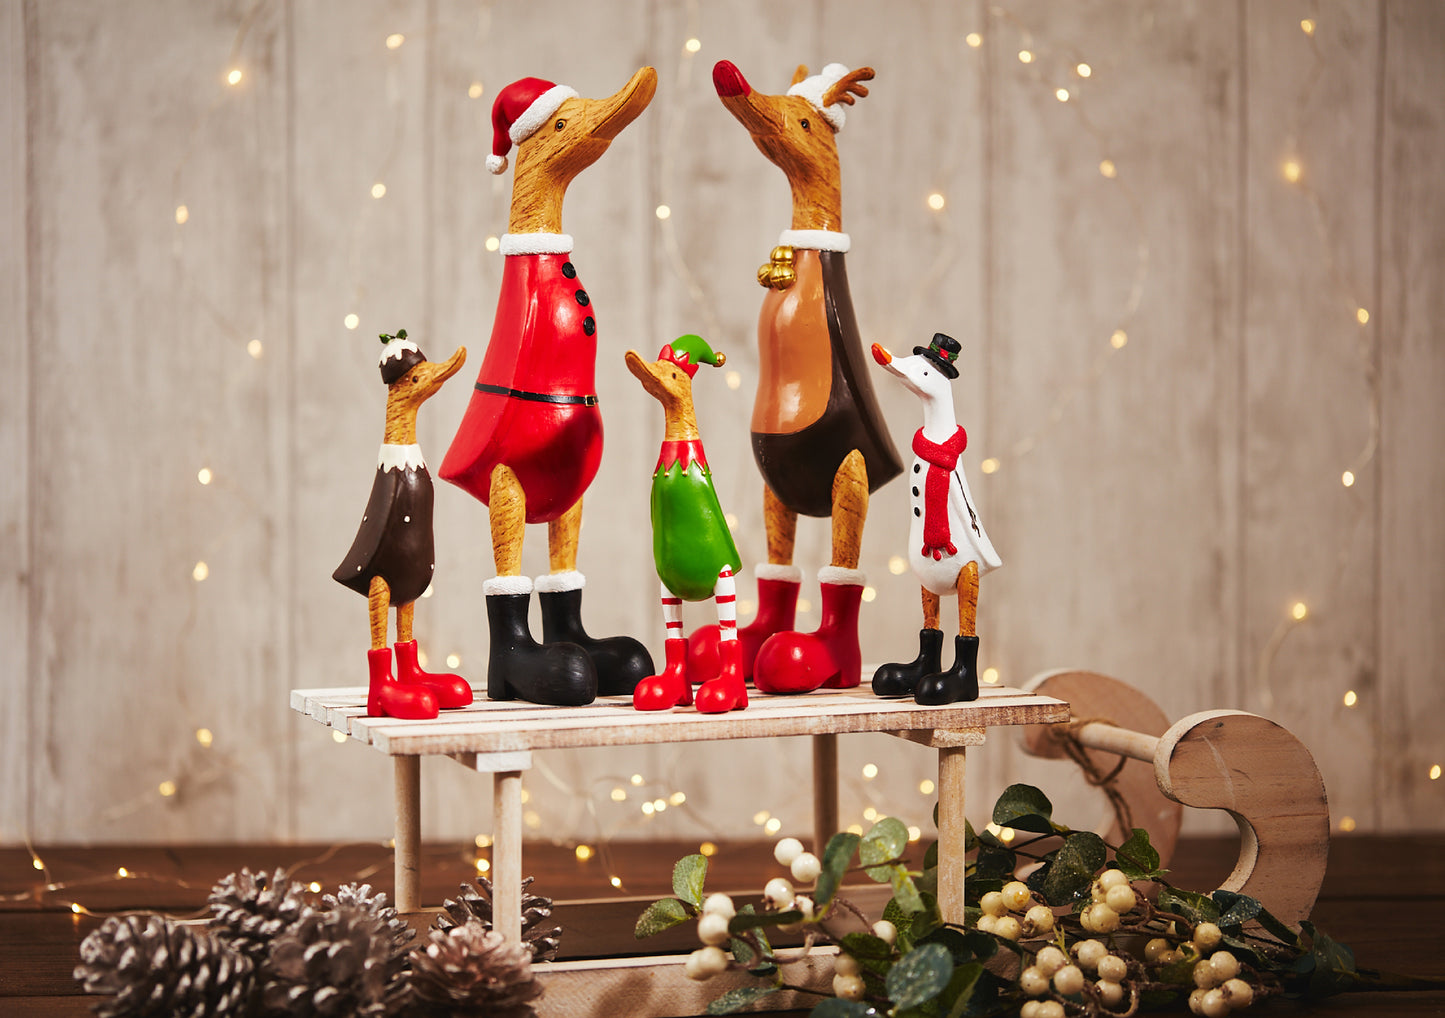 Cute Christmas Ducks - assorted styles available